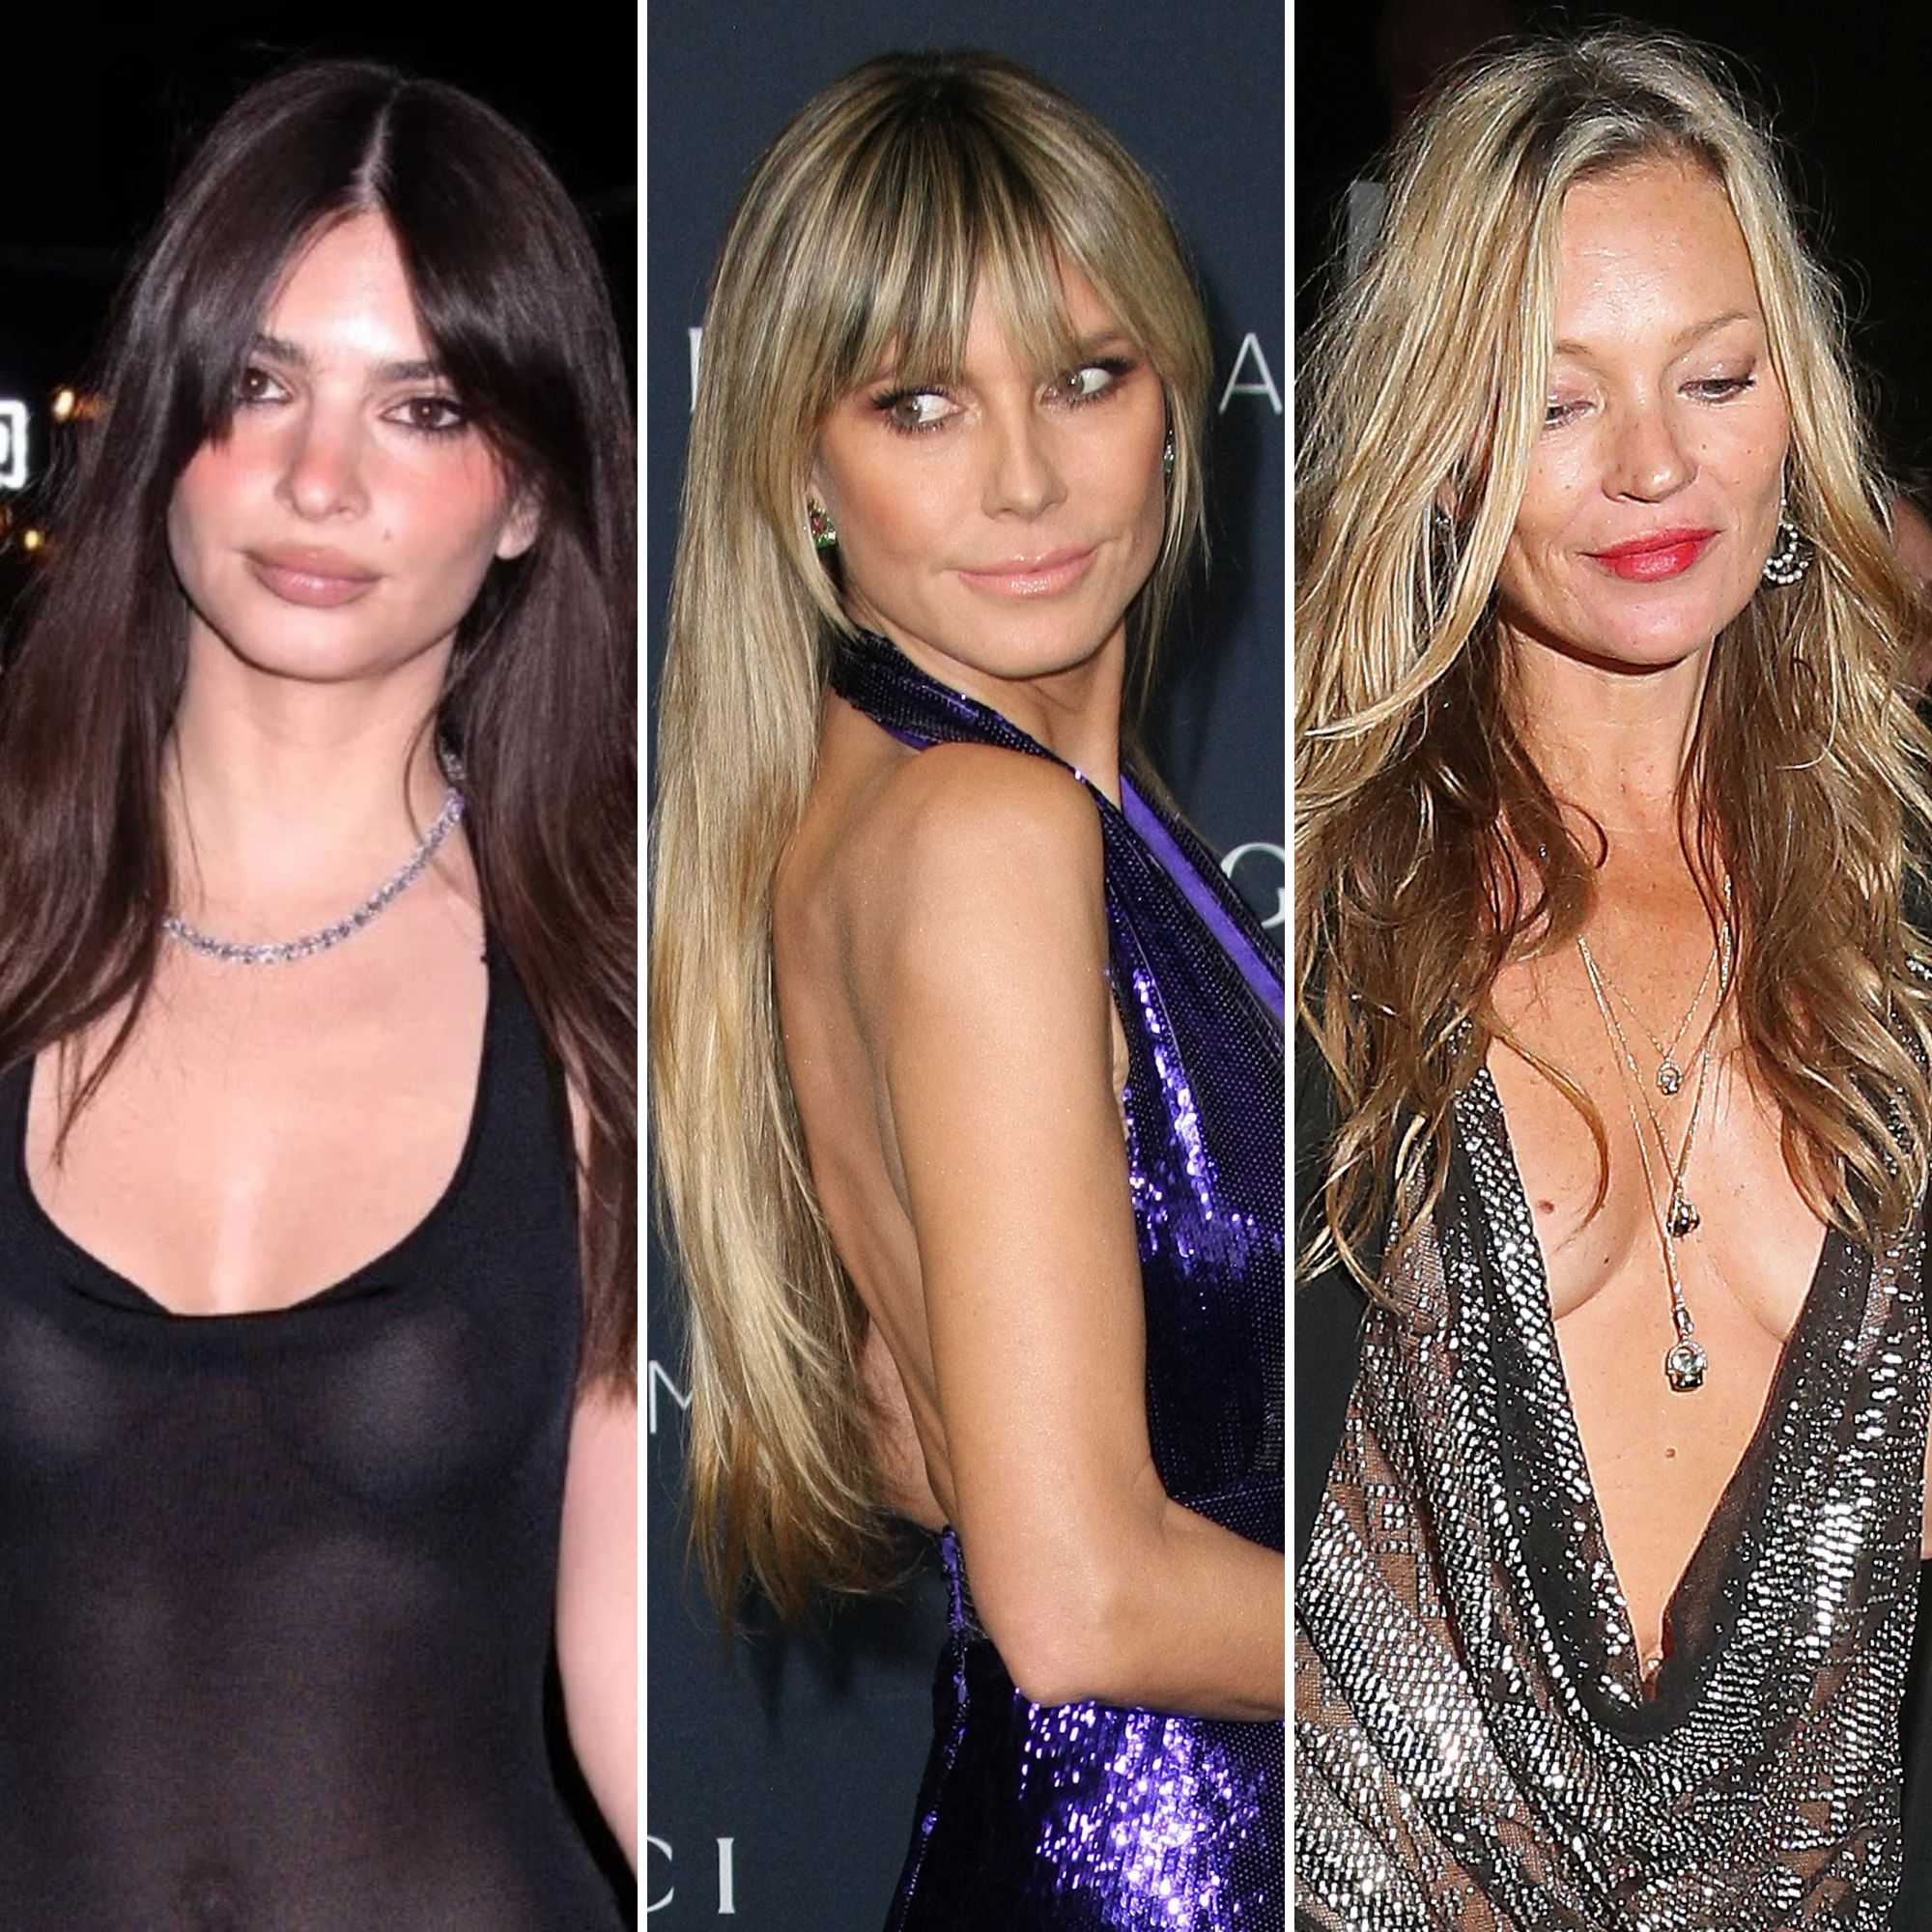 Celebrities' Major Public Nip Slips: Wardrobe Malfunction Photos